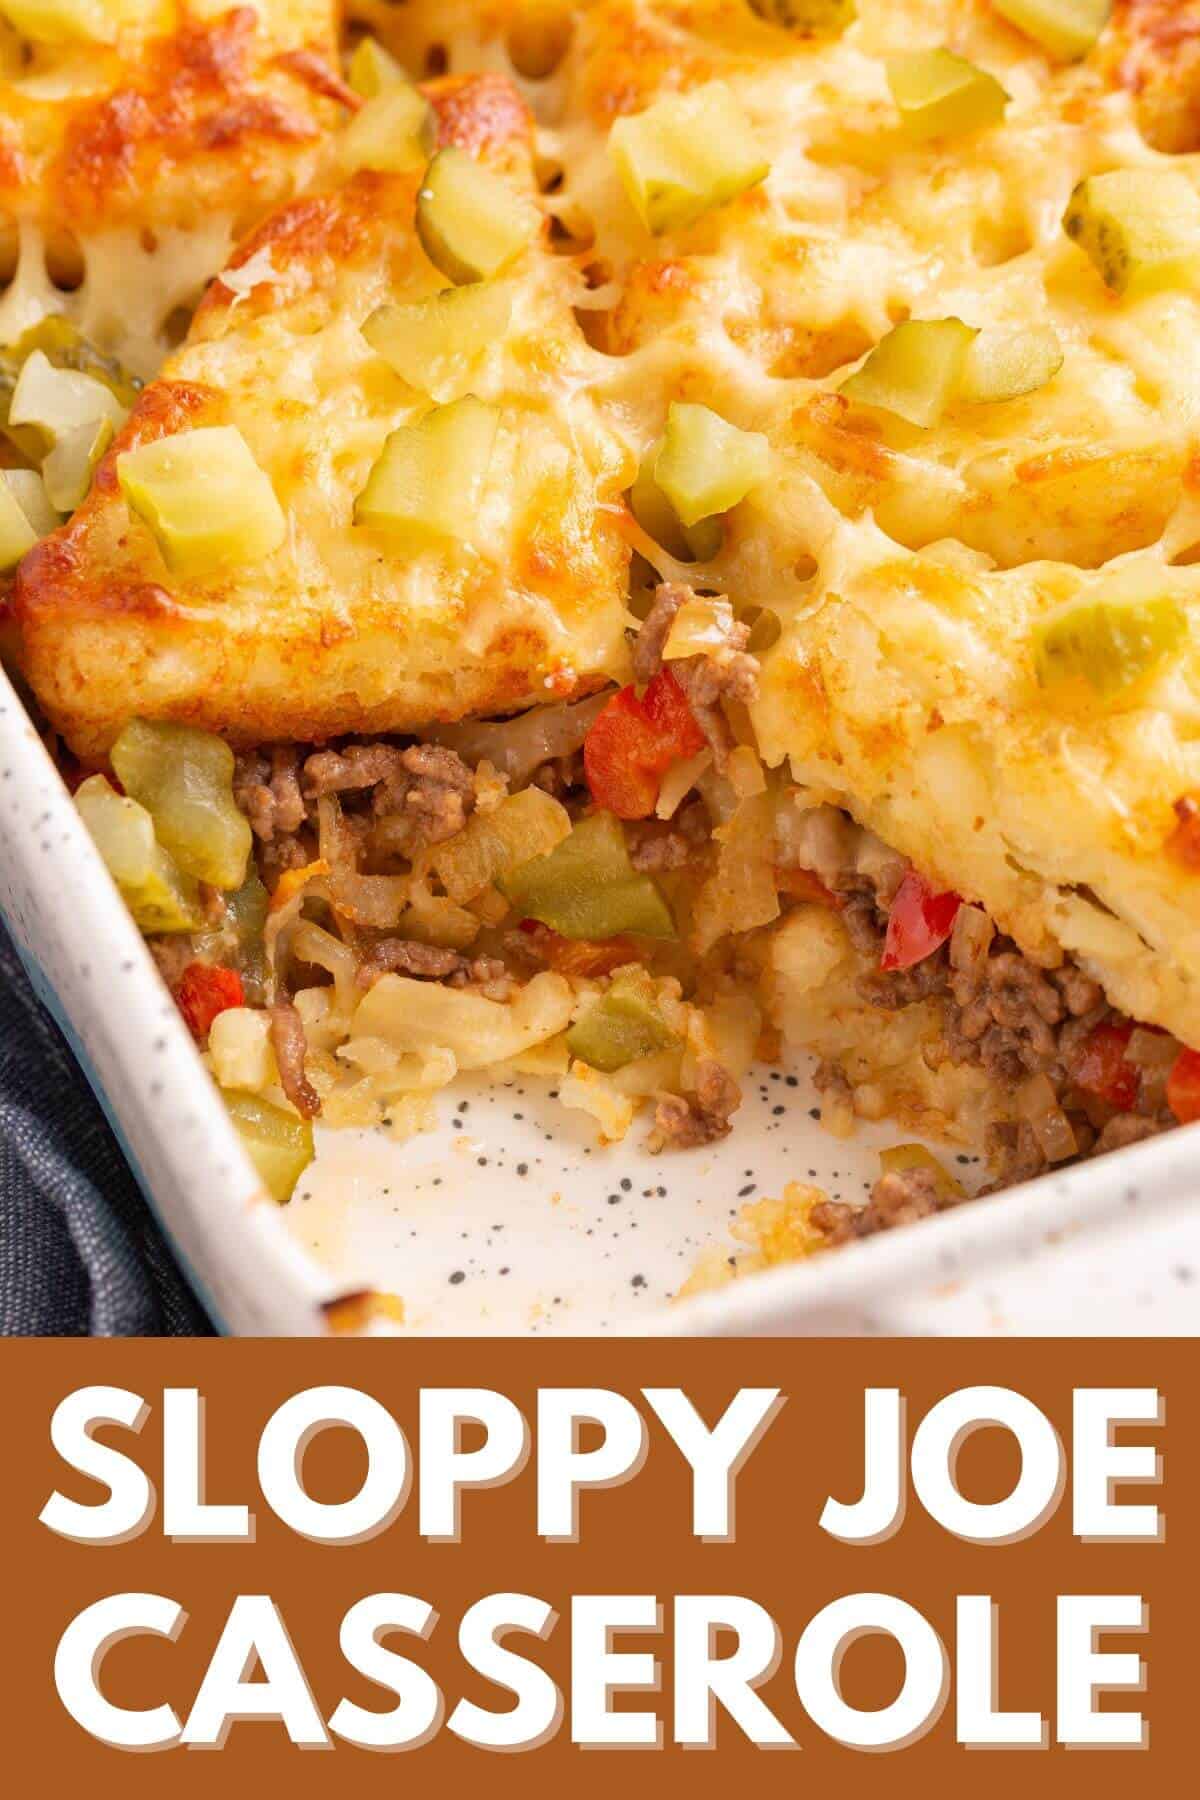 Sloppy joe casserole with recipe title text overlay.